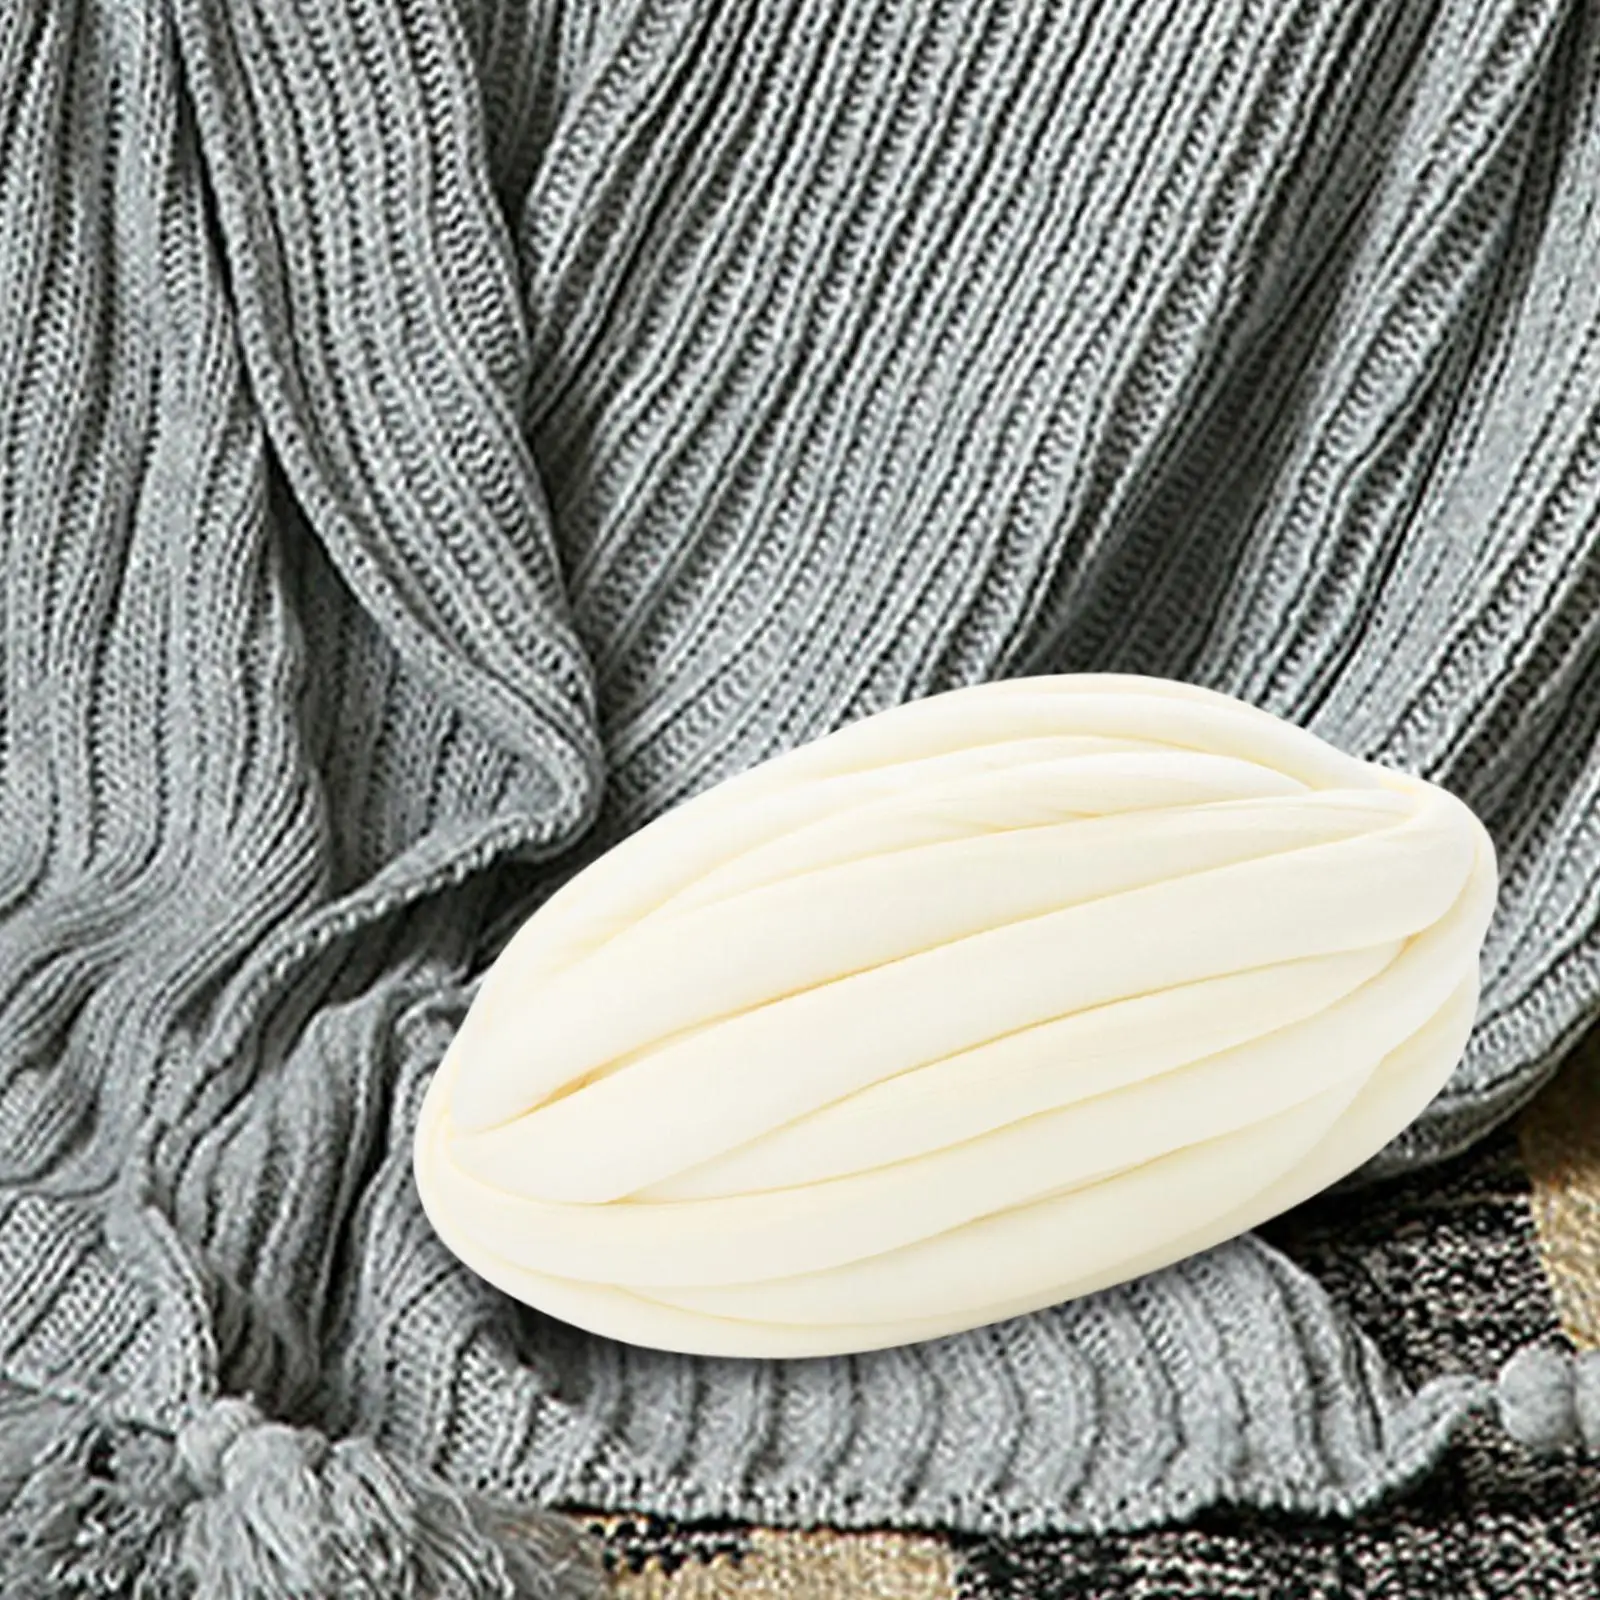 Chunky Wool Yarn Super Bulky Giant Wool Yarn Hand Knit Yarn Arm Knit for Crocheting Knitted Blanket Mat Scarf Sweater Blanket